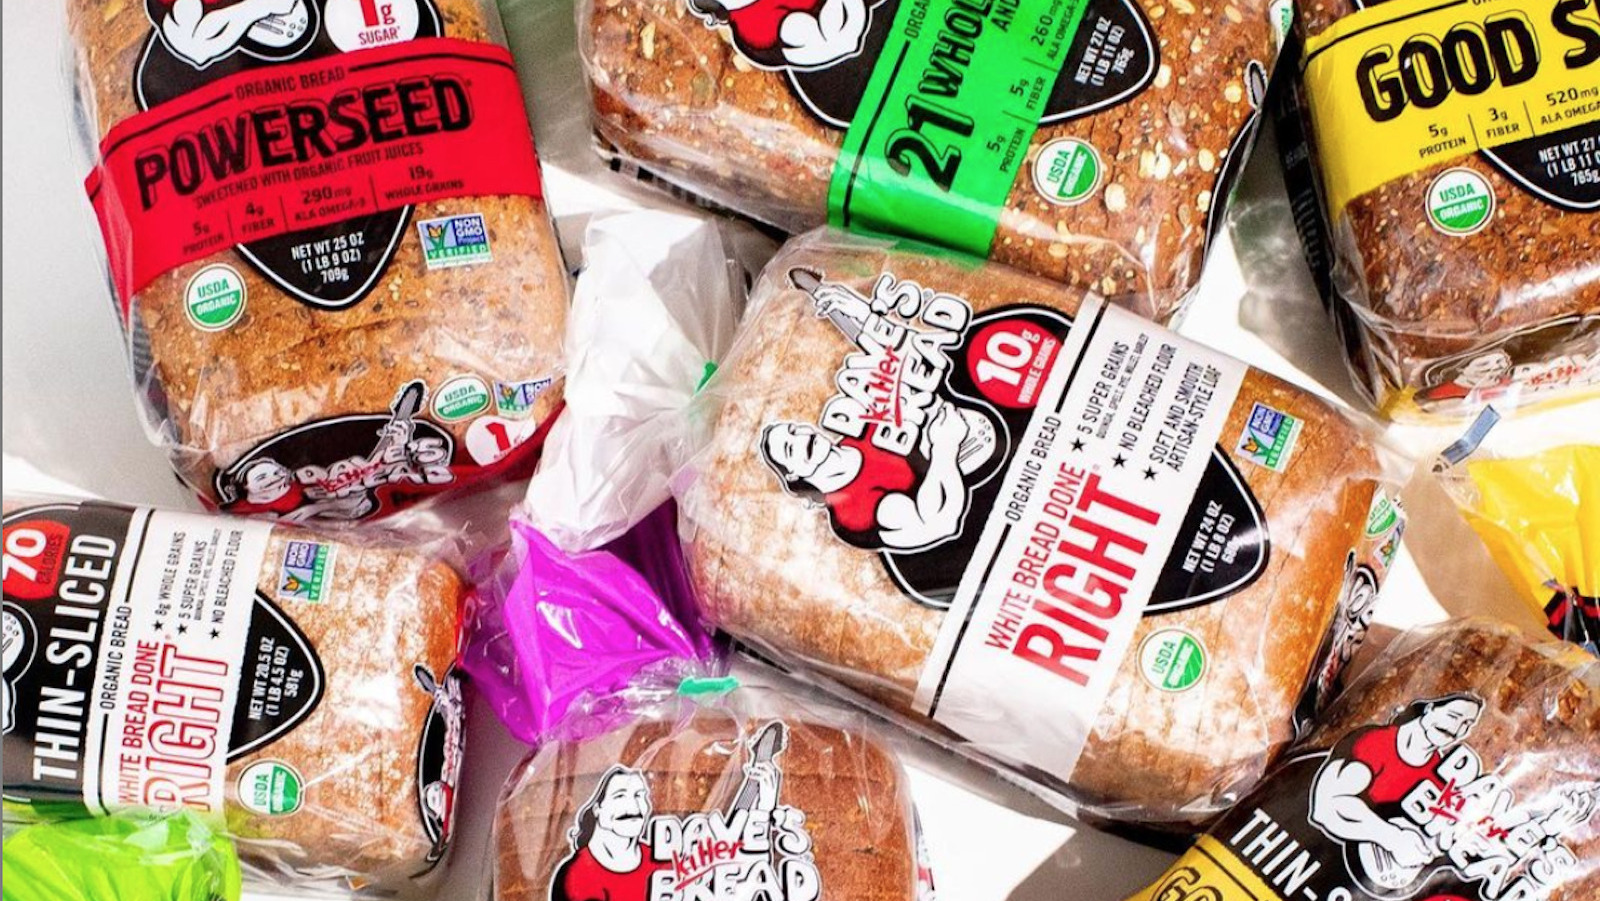 Dave's Killer Bread Vs Ezekiel Bread: Which Is More Nutritious?